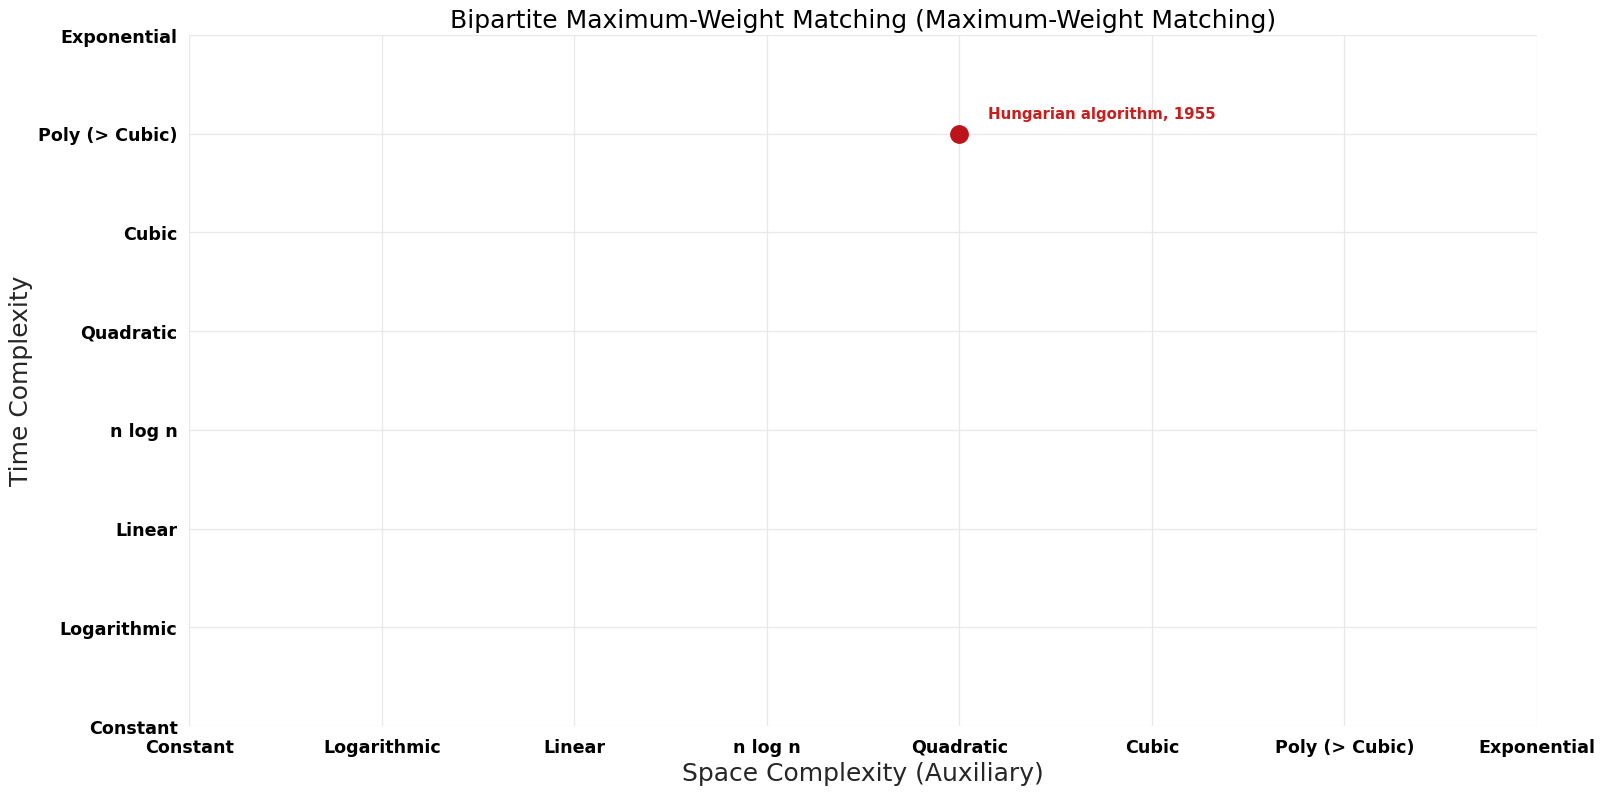 File:Maximum-Weight Matching - Bipartite Maximum-Weight Matching - Pareto Frontier.png